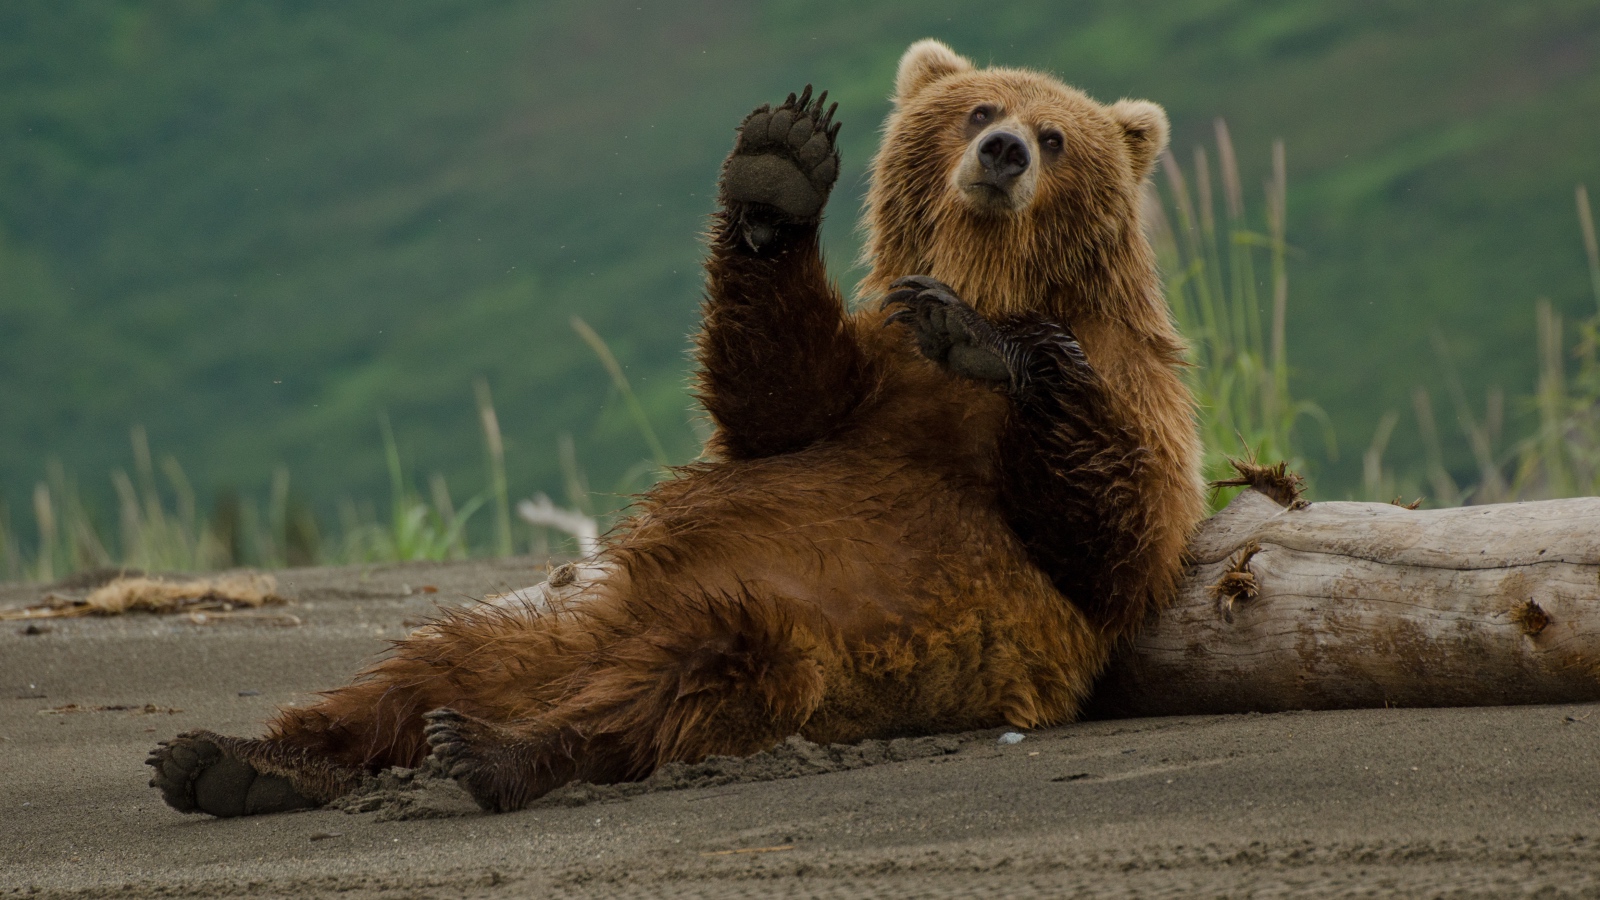 Alaskan brown bear appears to be waving on the beach